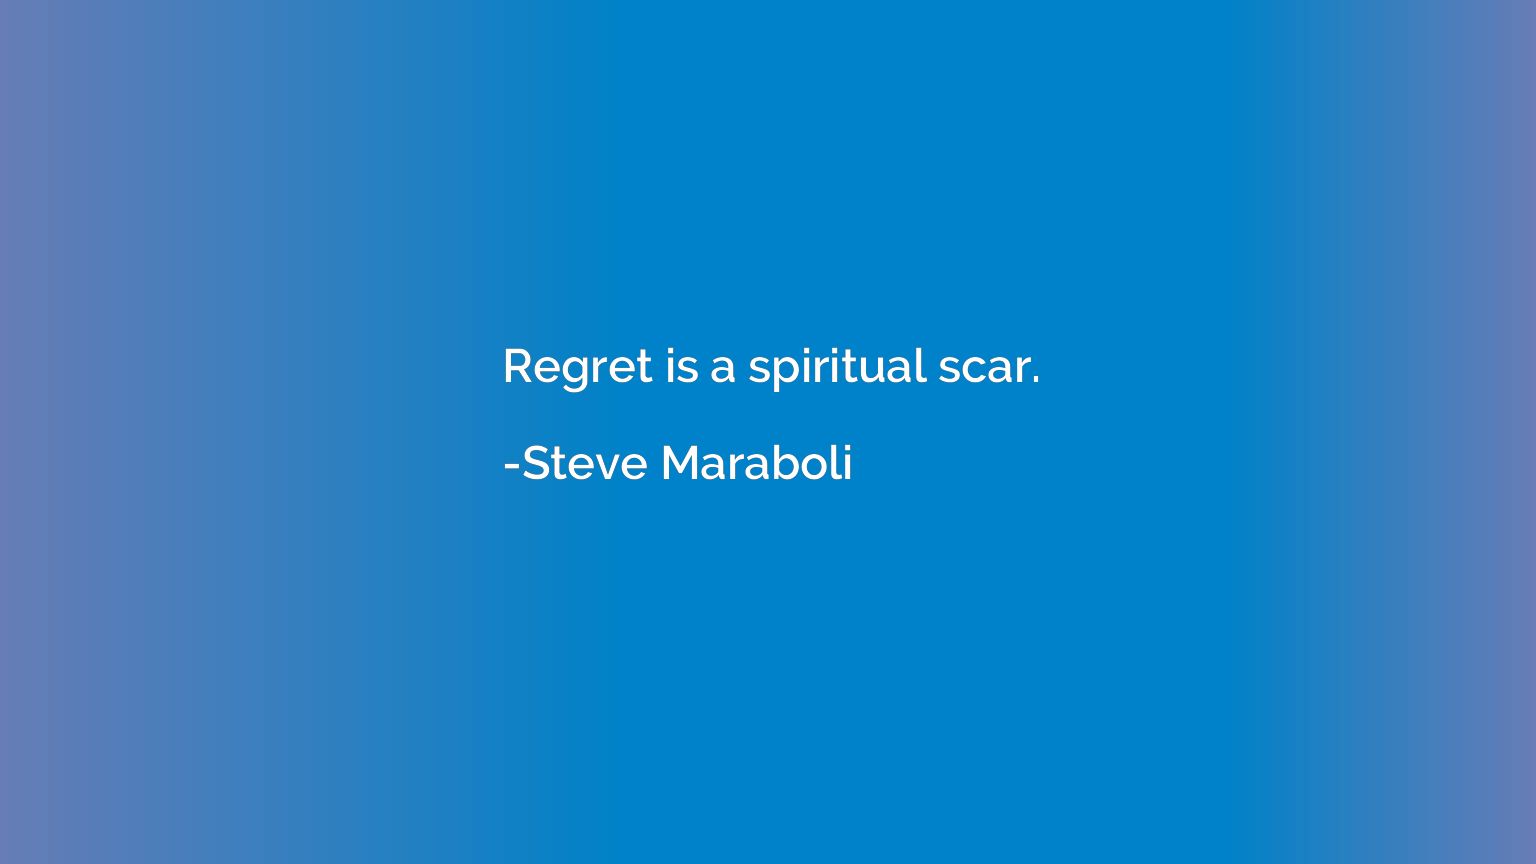 Regret is a spiritual scar.